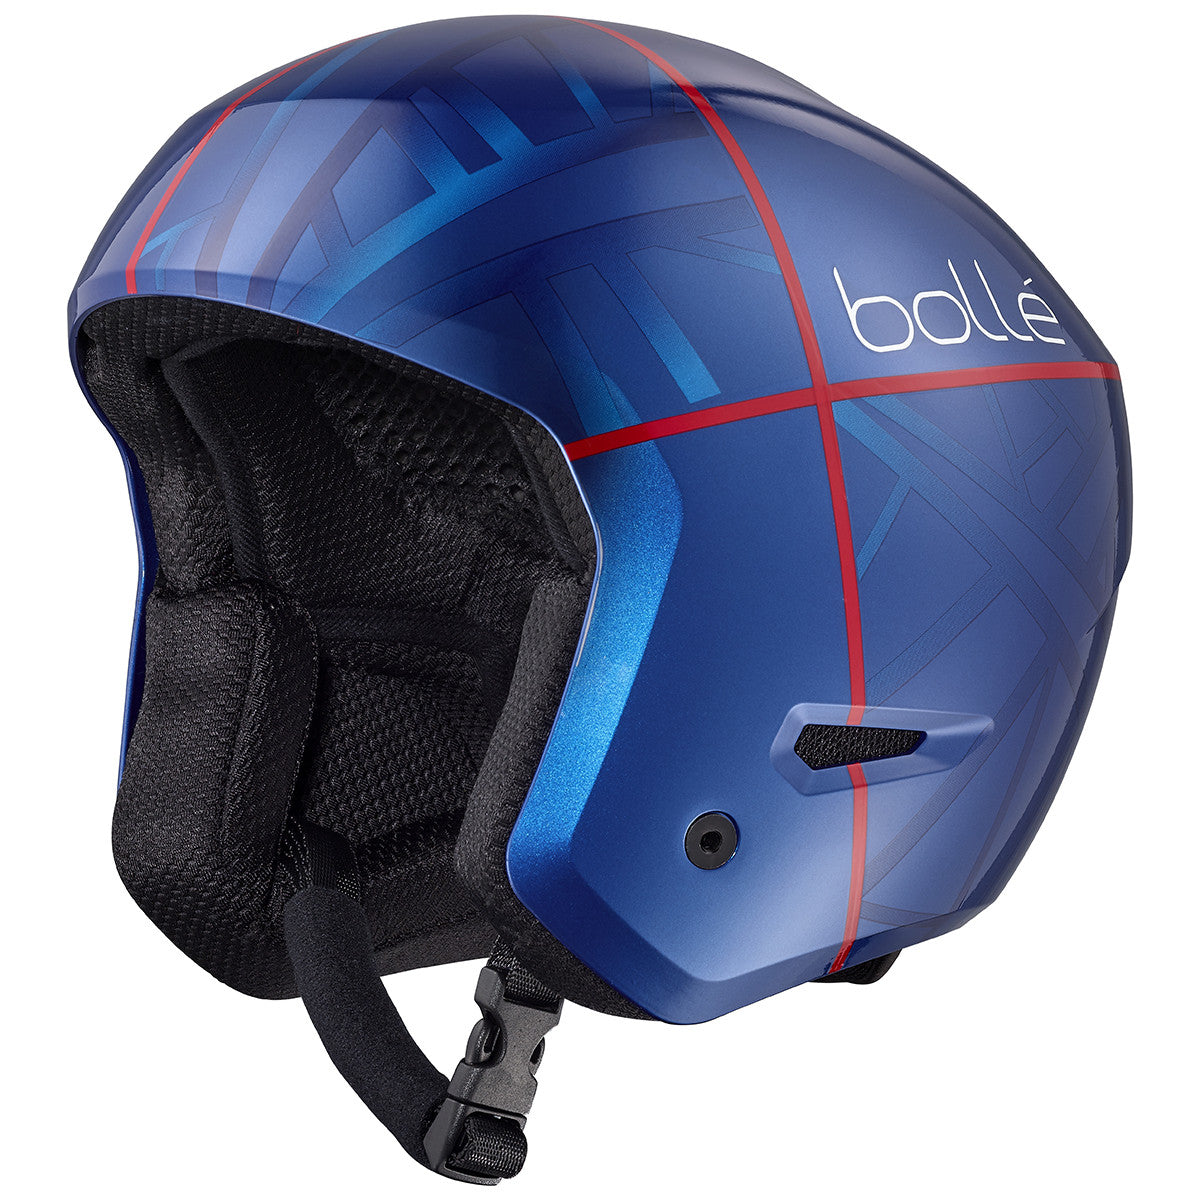 Bolle Medalist Youth Race Helmet HELMETS Bolle Alexis Pinturault Signature Series S-M 53-56cm 